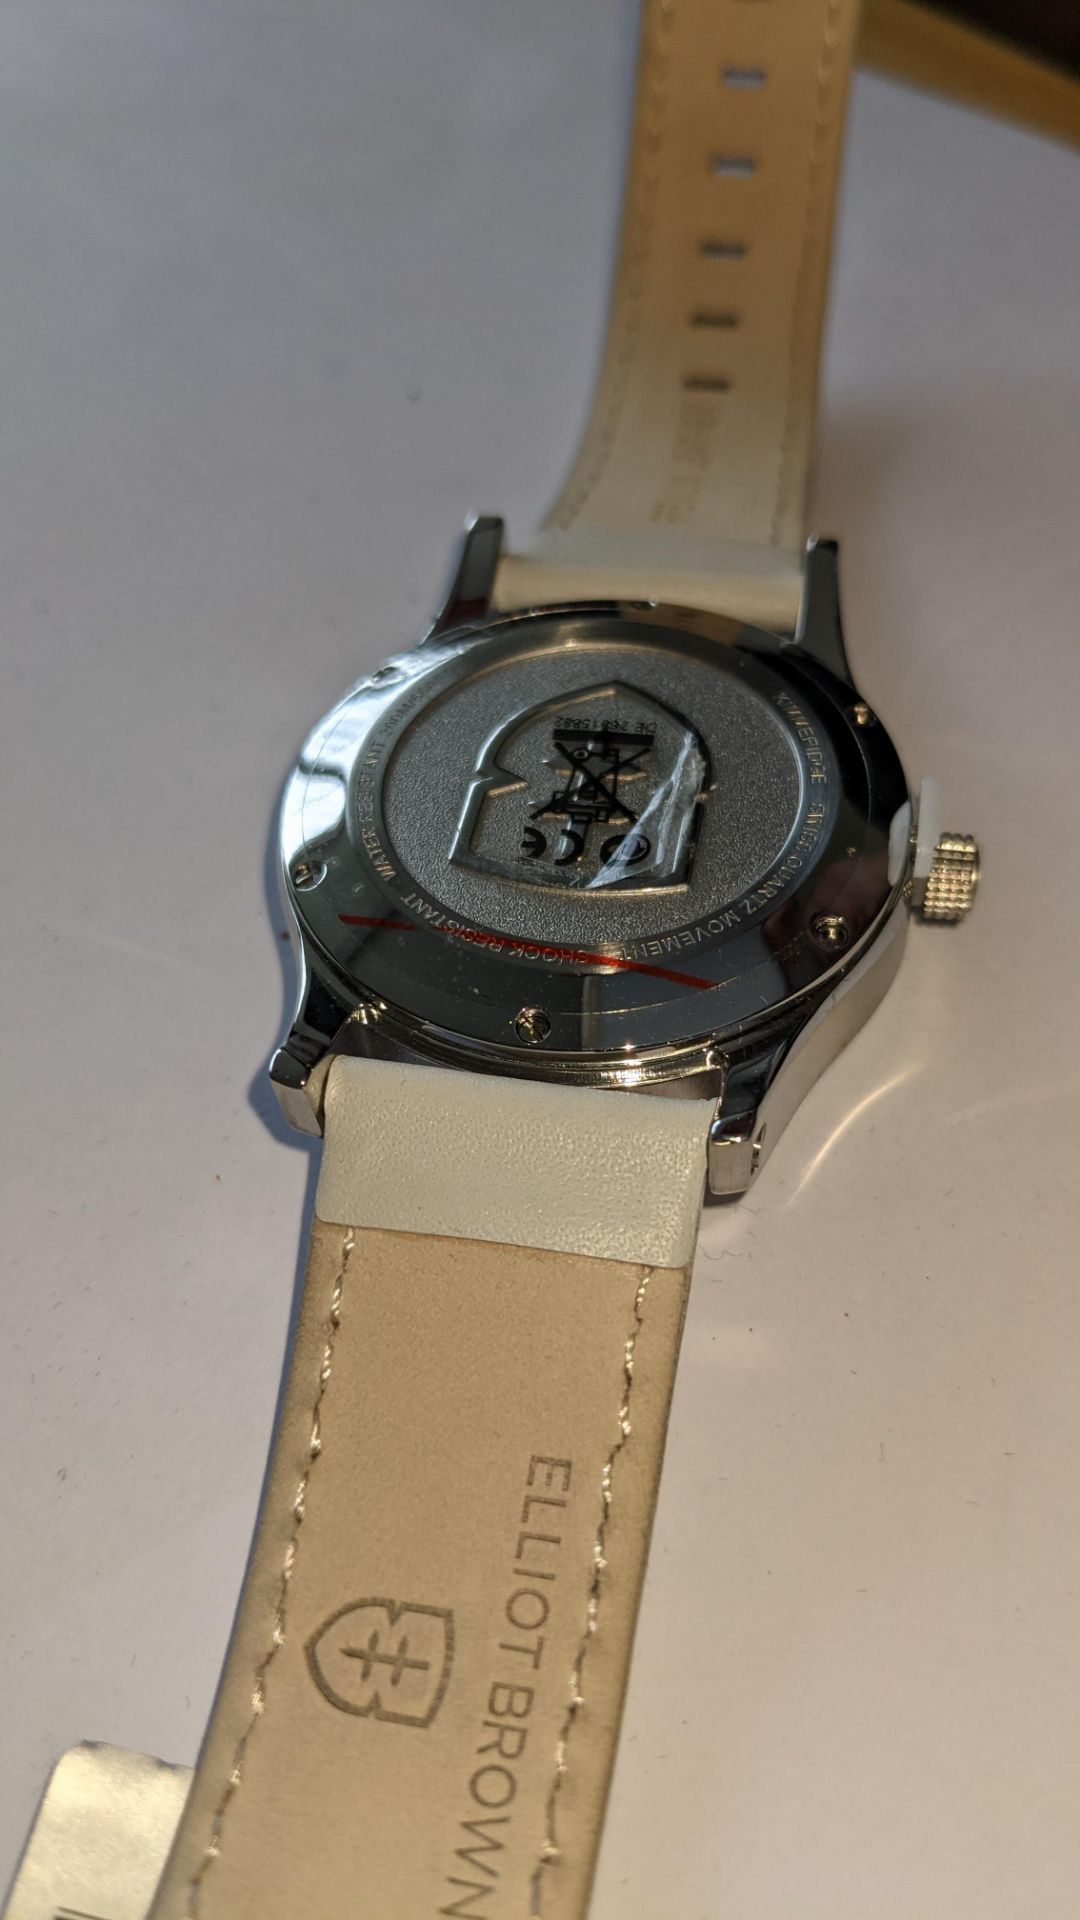 Elliot Brown The Kimmeridge watch, product code 405-008-L54. Stainless steel, 200M water resistant, - Image 14 of 18